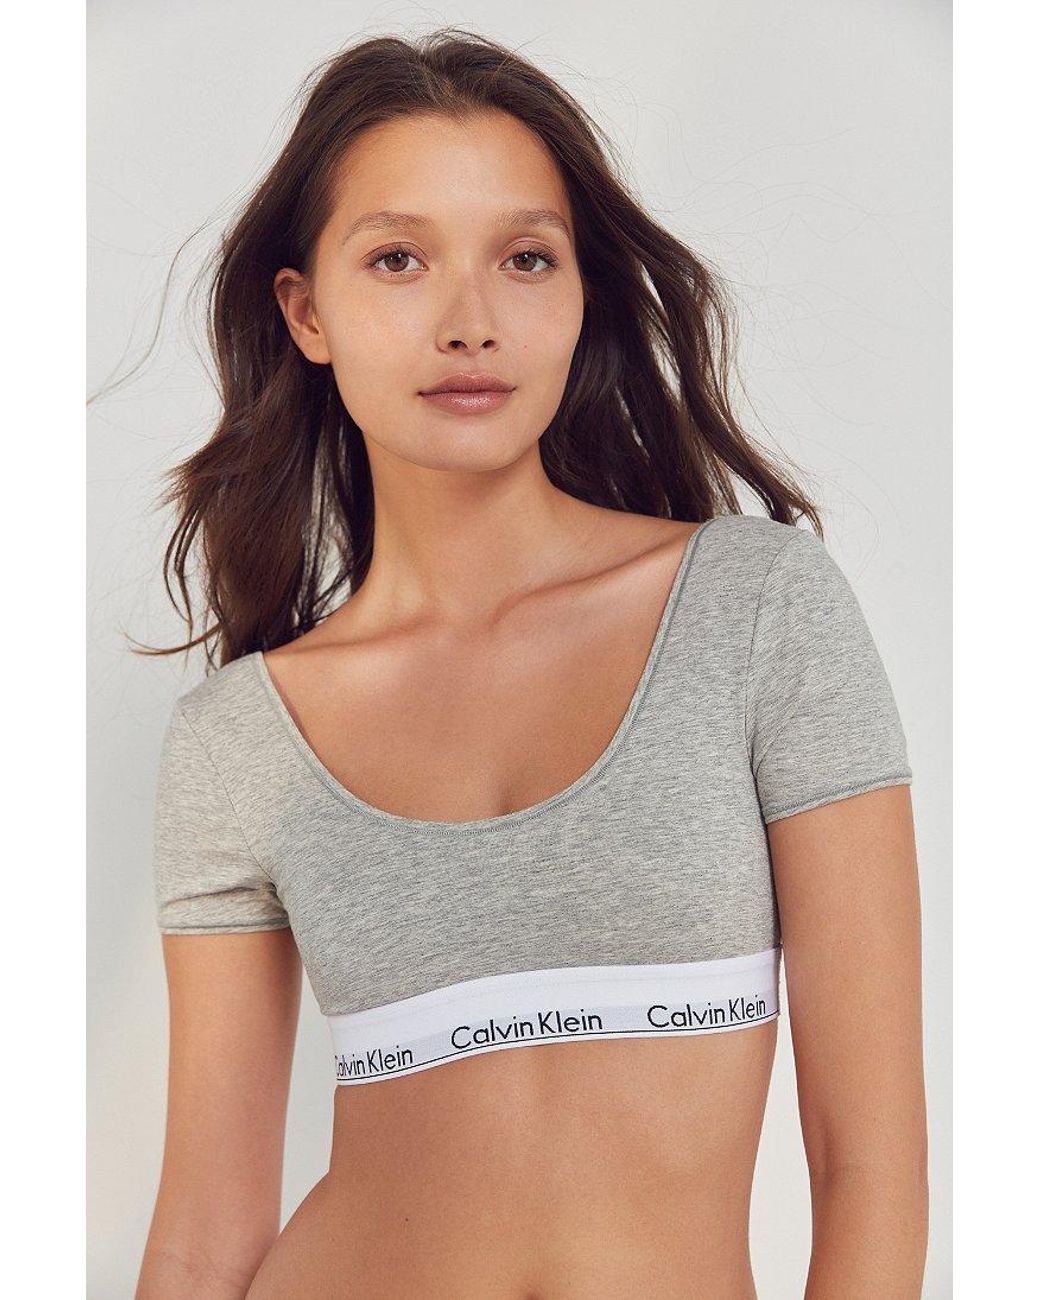 Calvin Klein Sports Bra Gray Size XS - $10 (50% Off Retail) - From erin